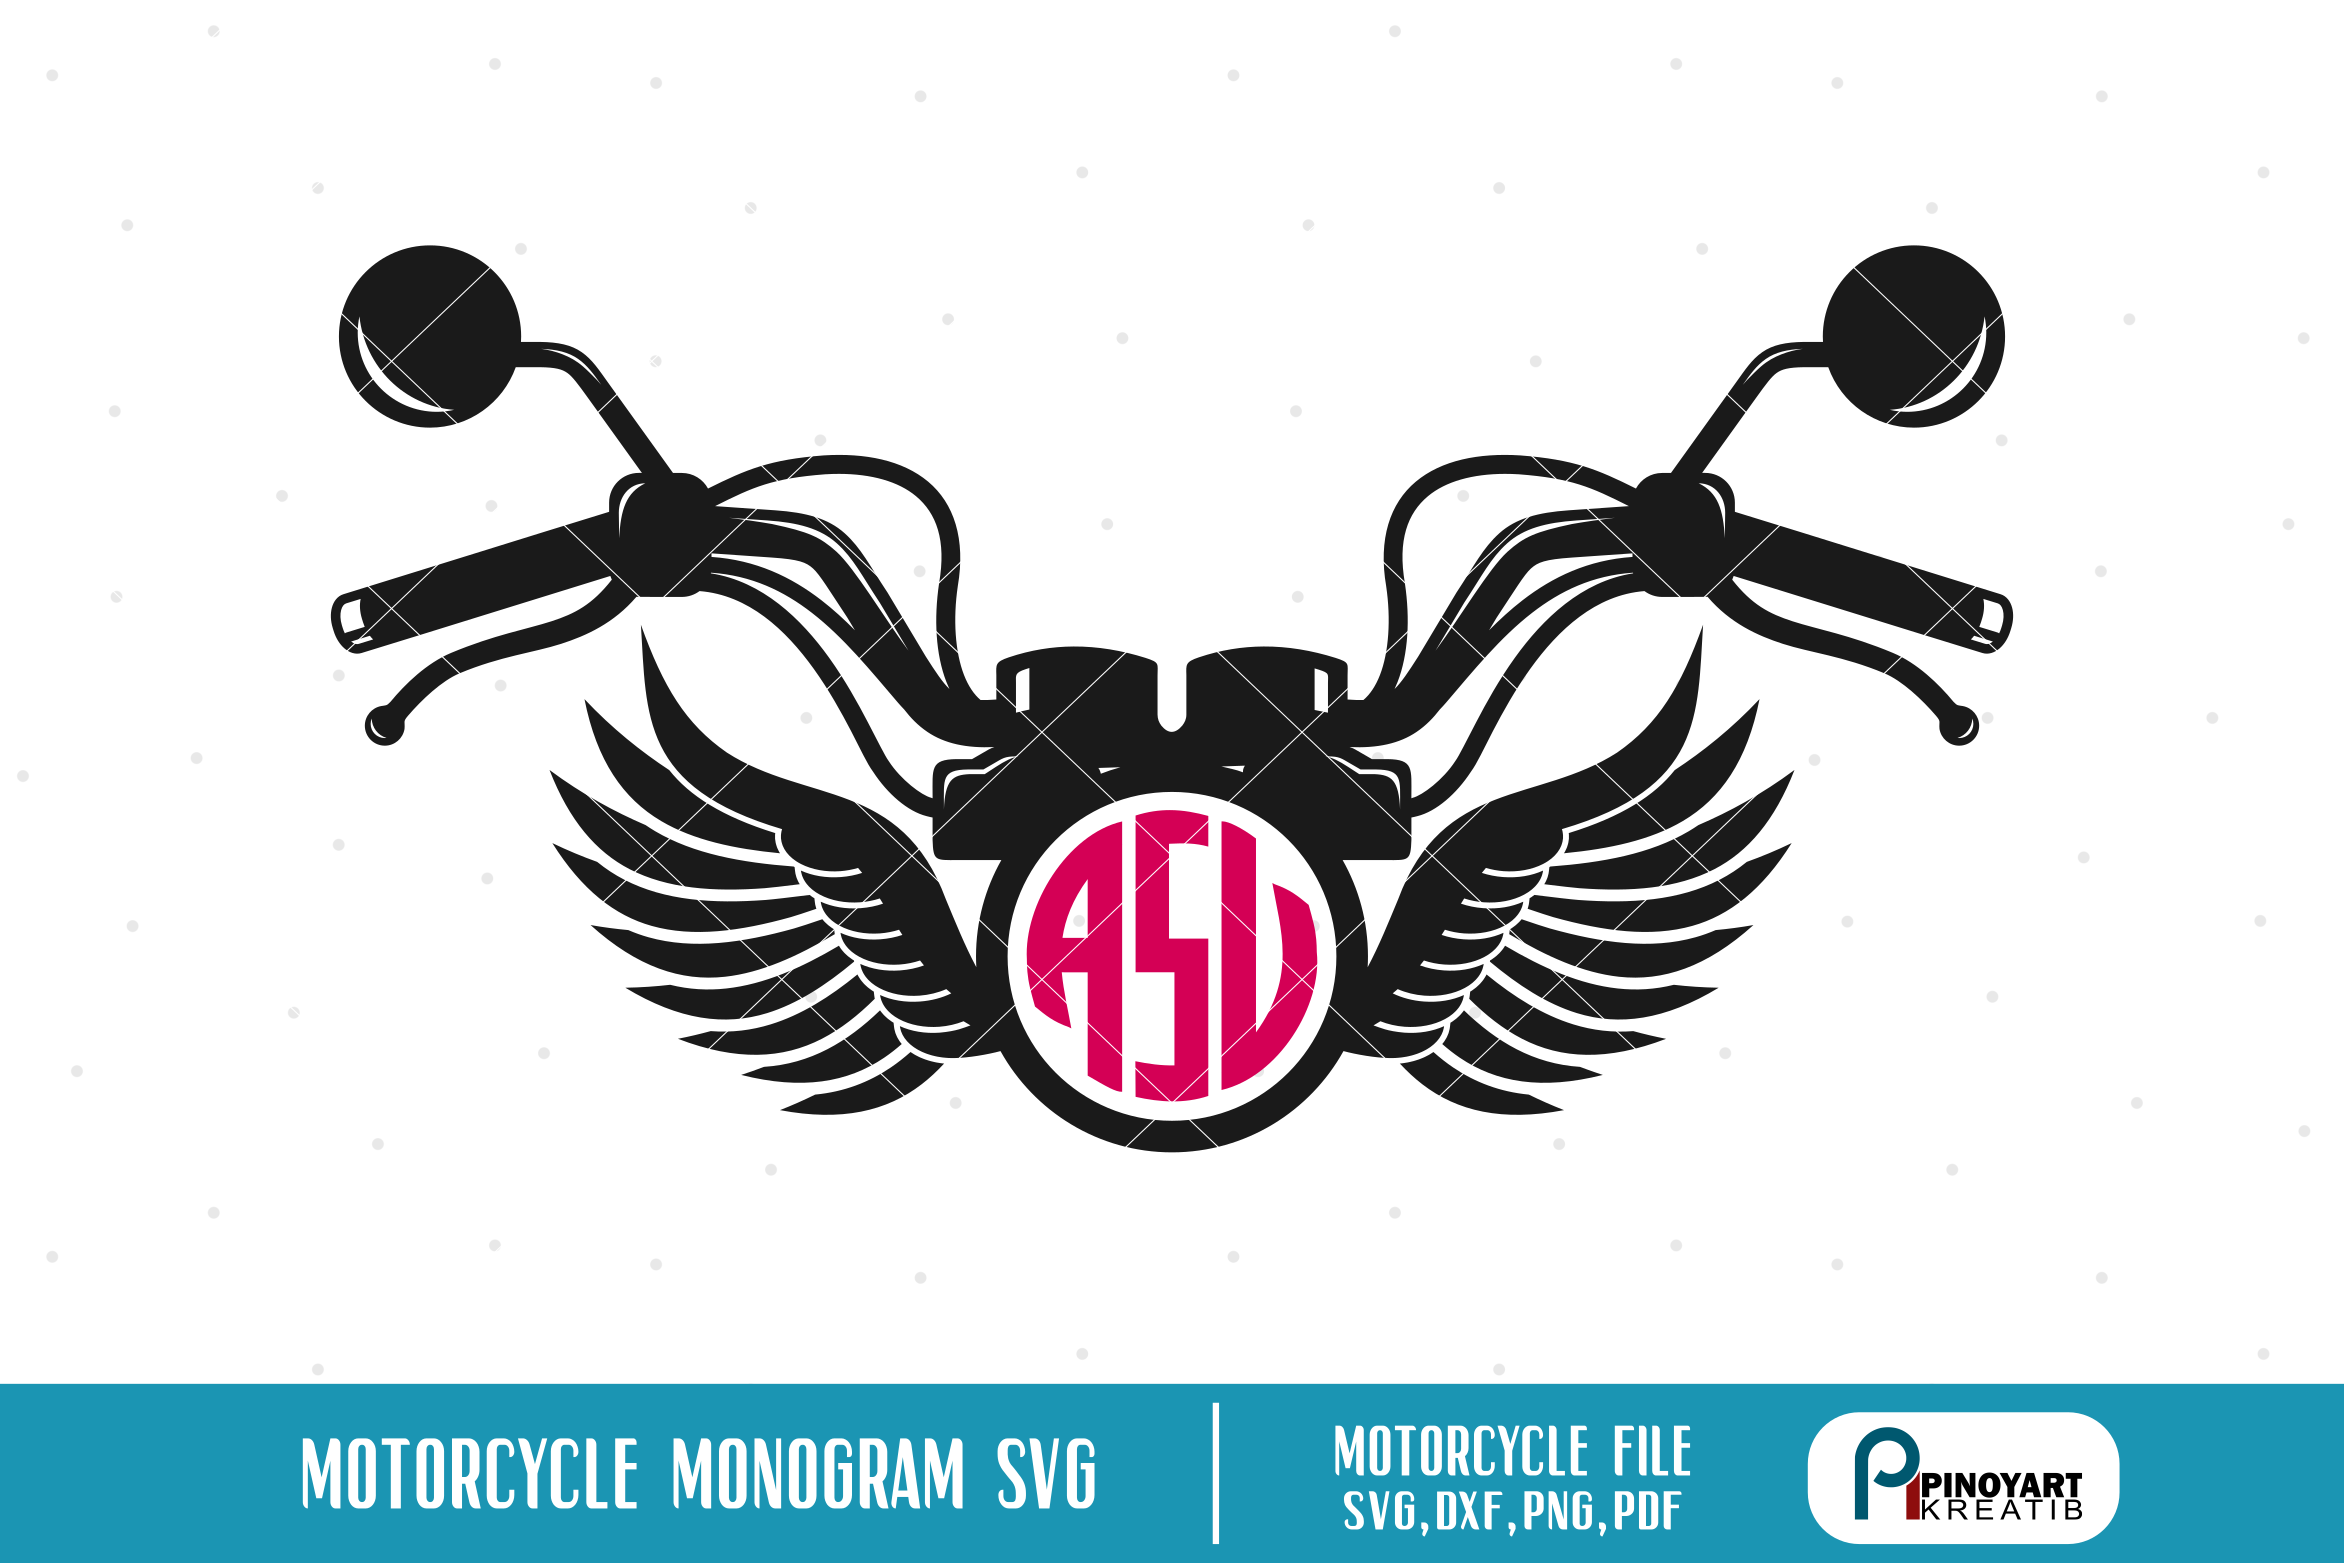 Download Motorcycle Monogram Cut File - a motorcycle vector